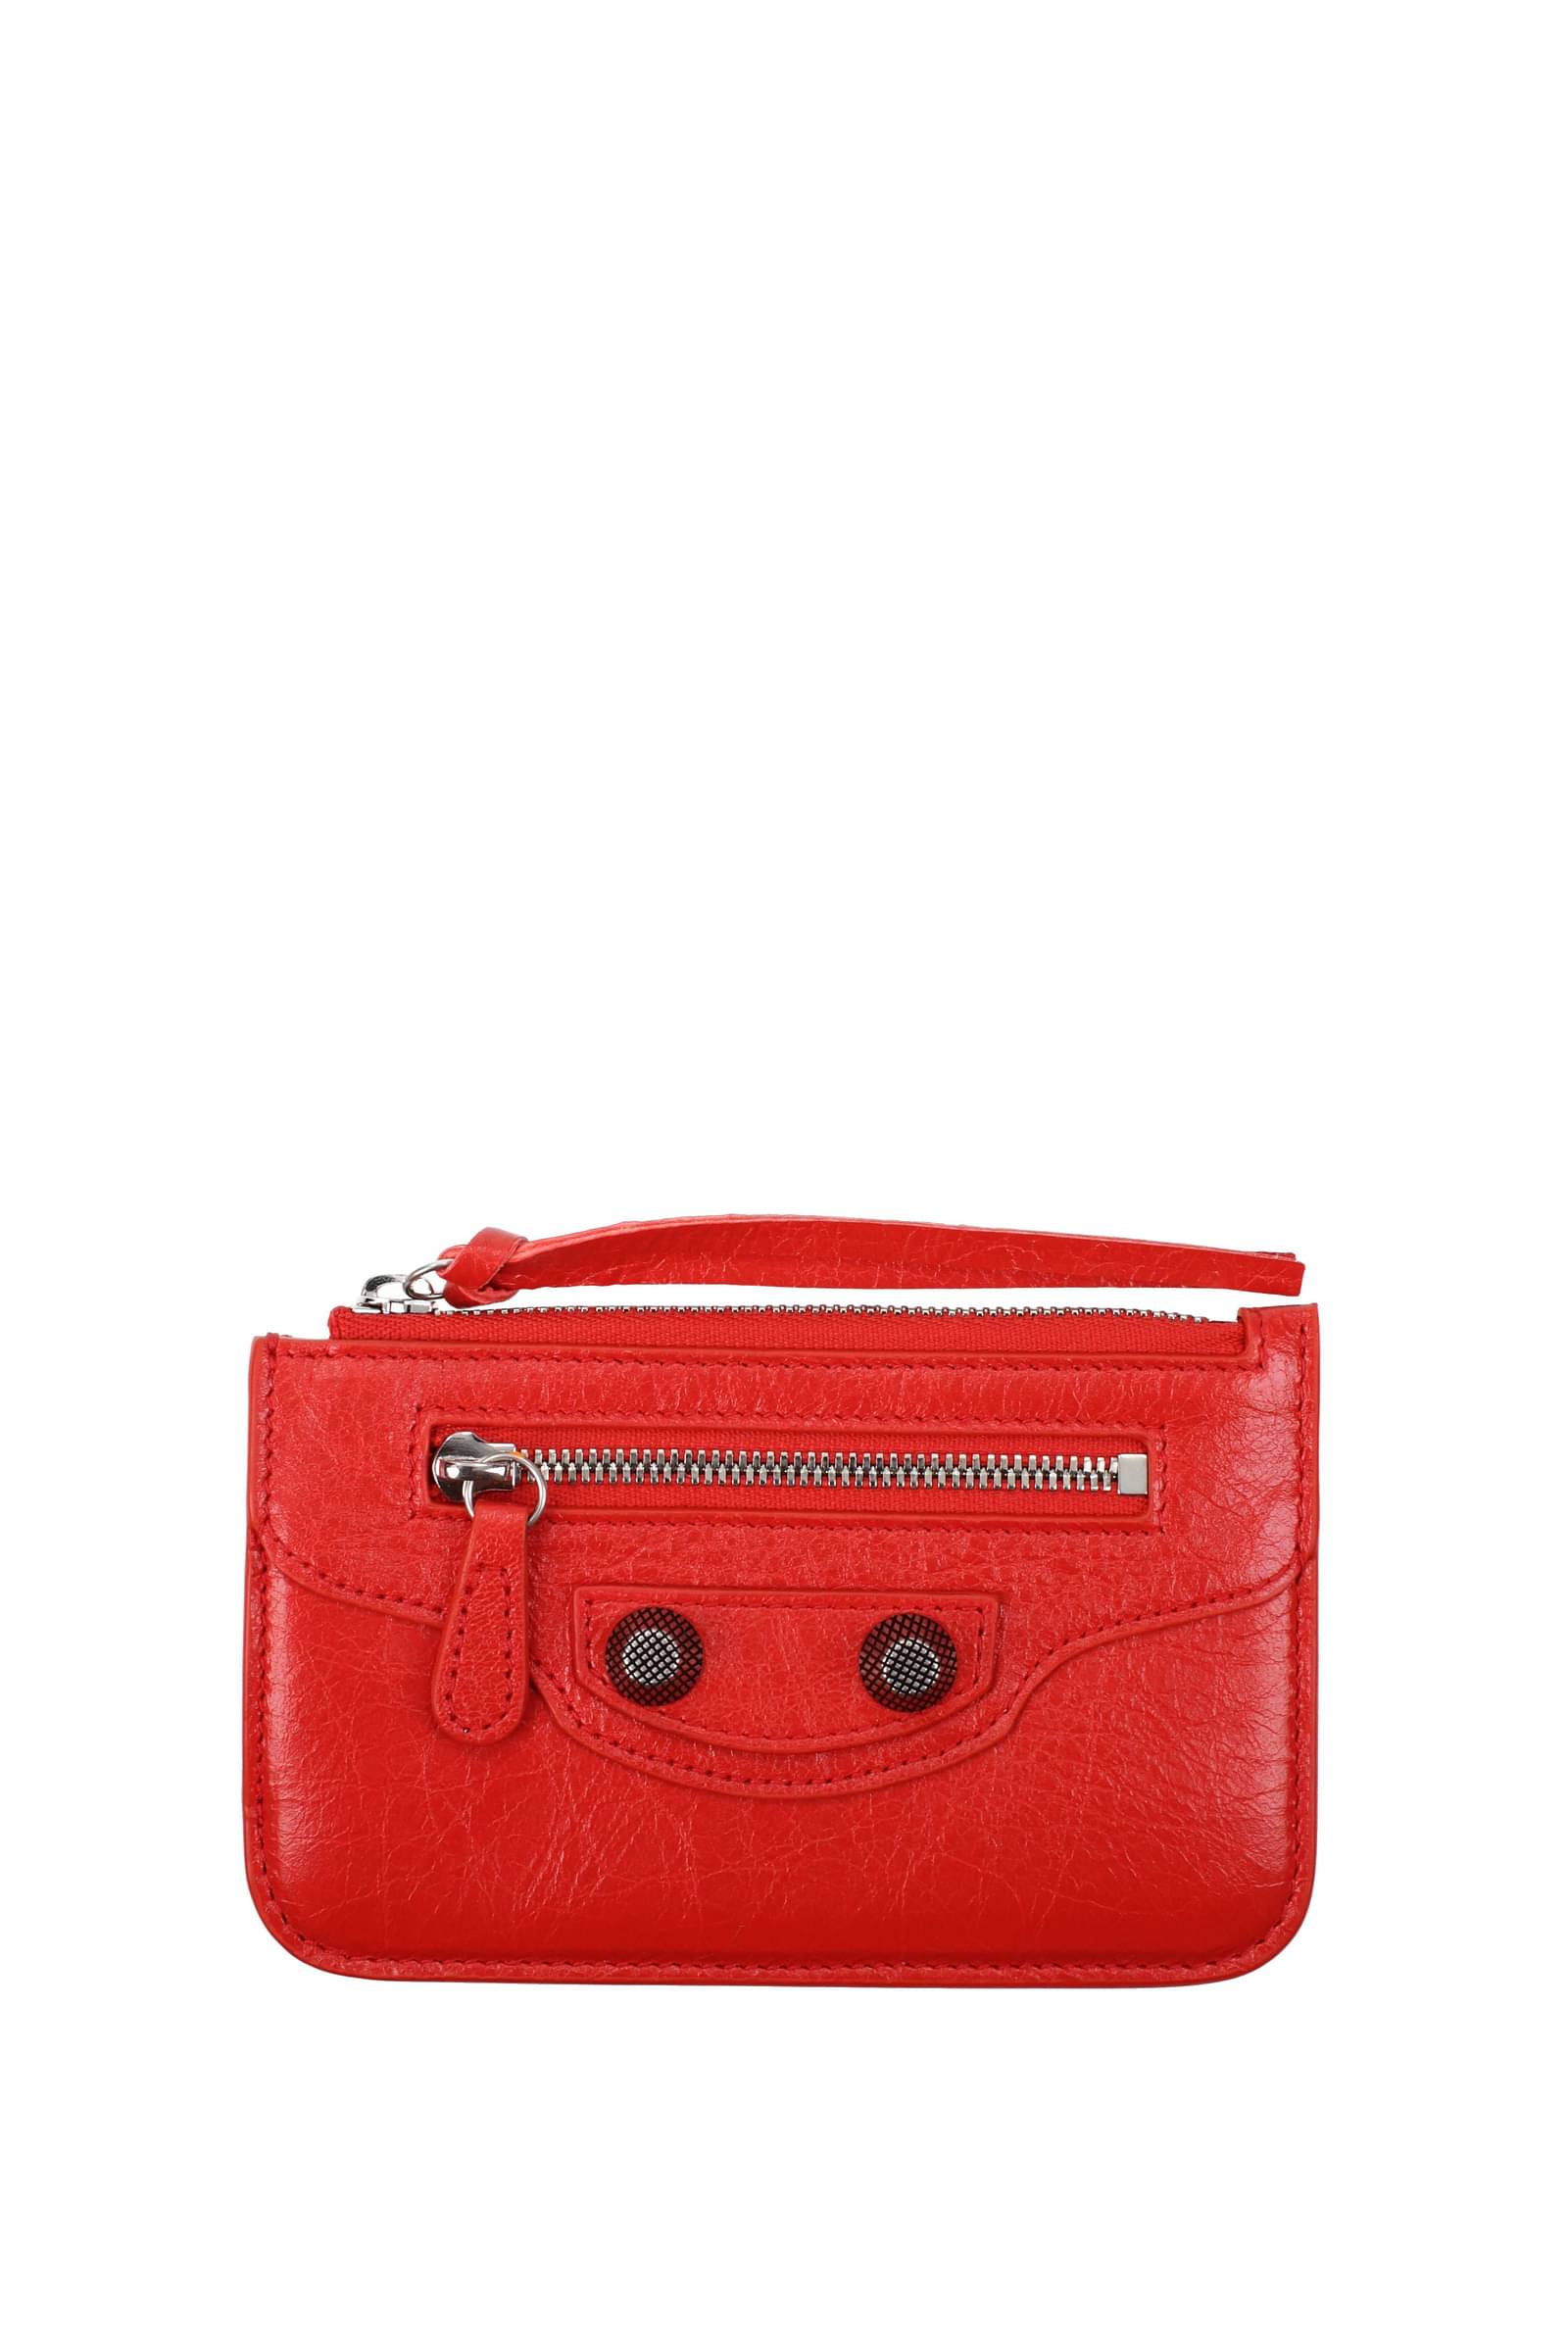 Balenciaga 638524 11R11 NEO CLASSIC TOP HANDLE MINI Bag Red